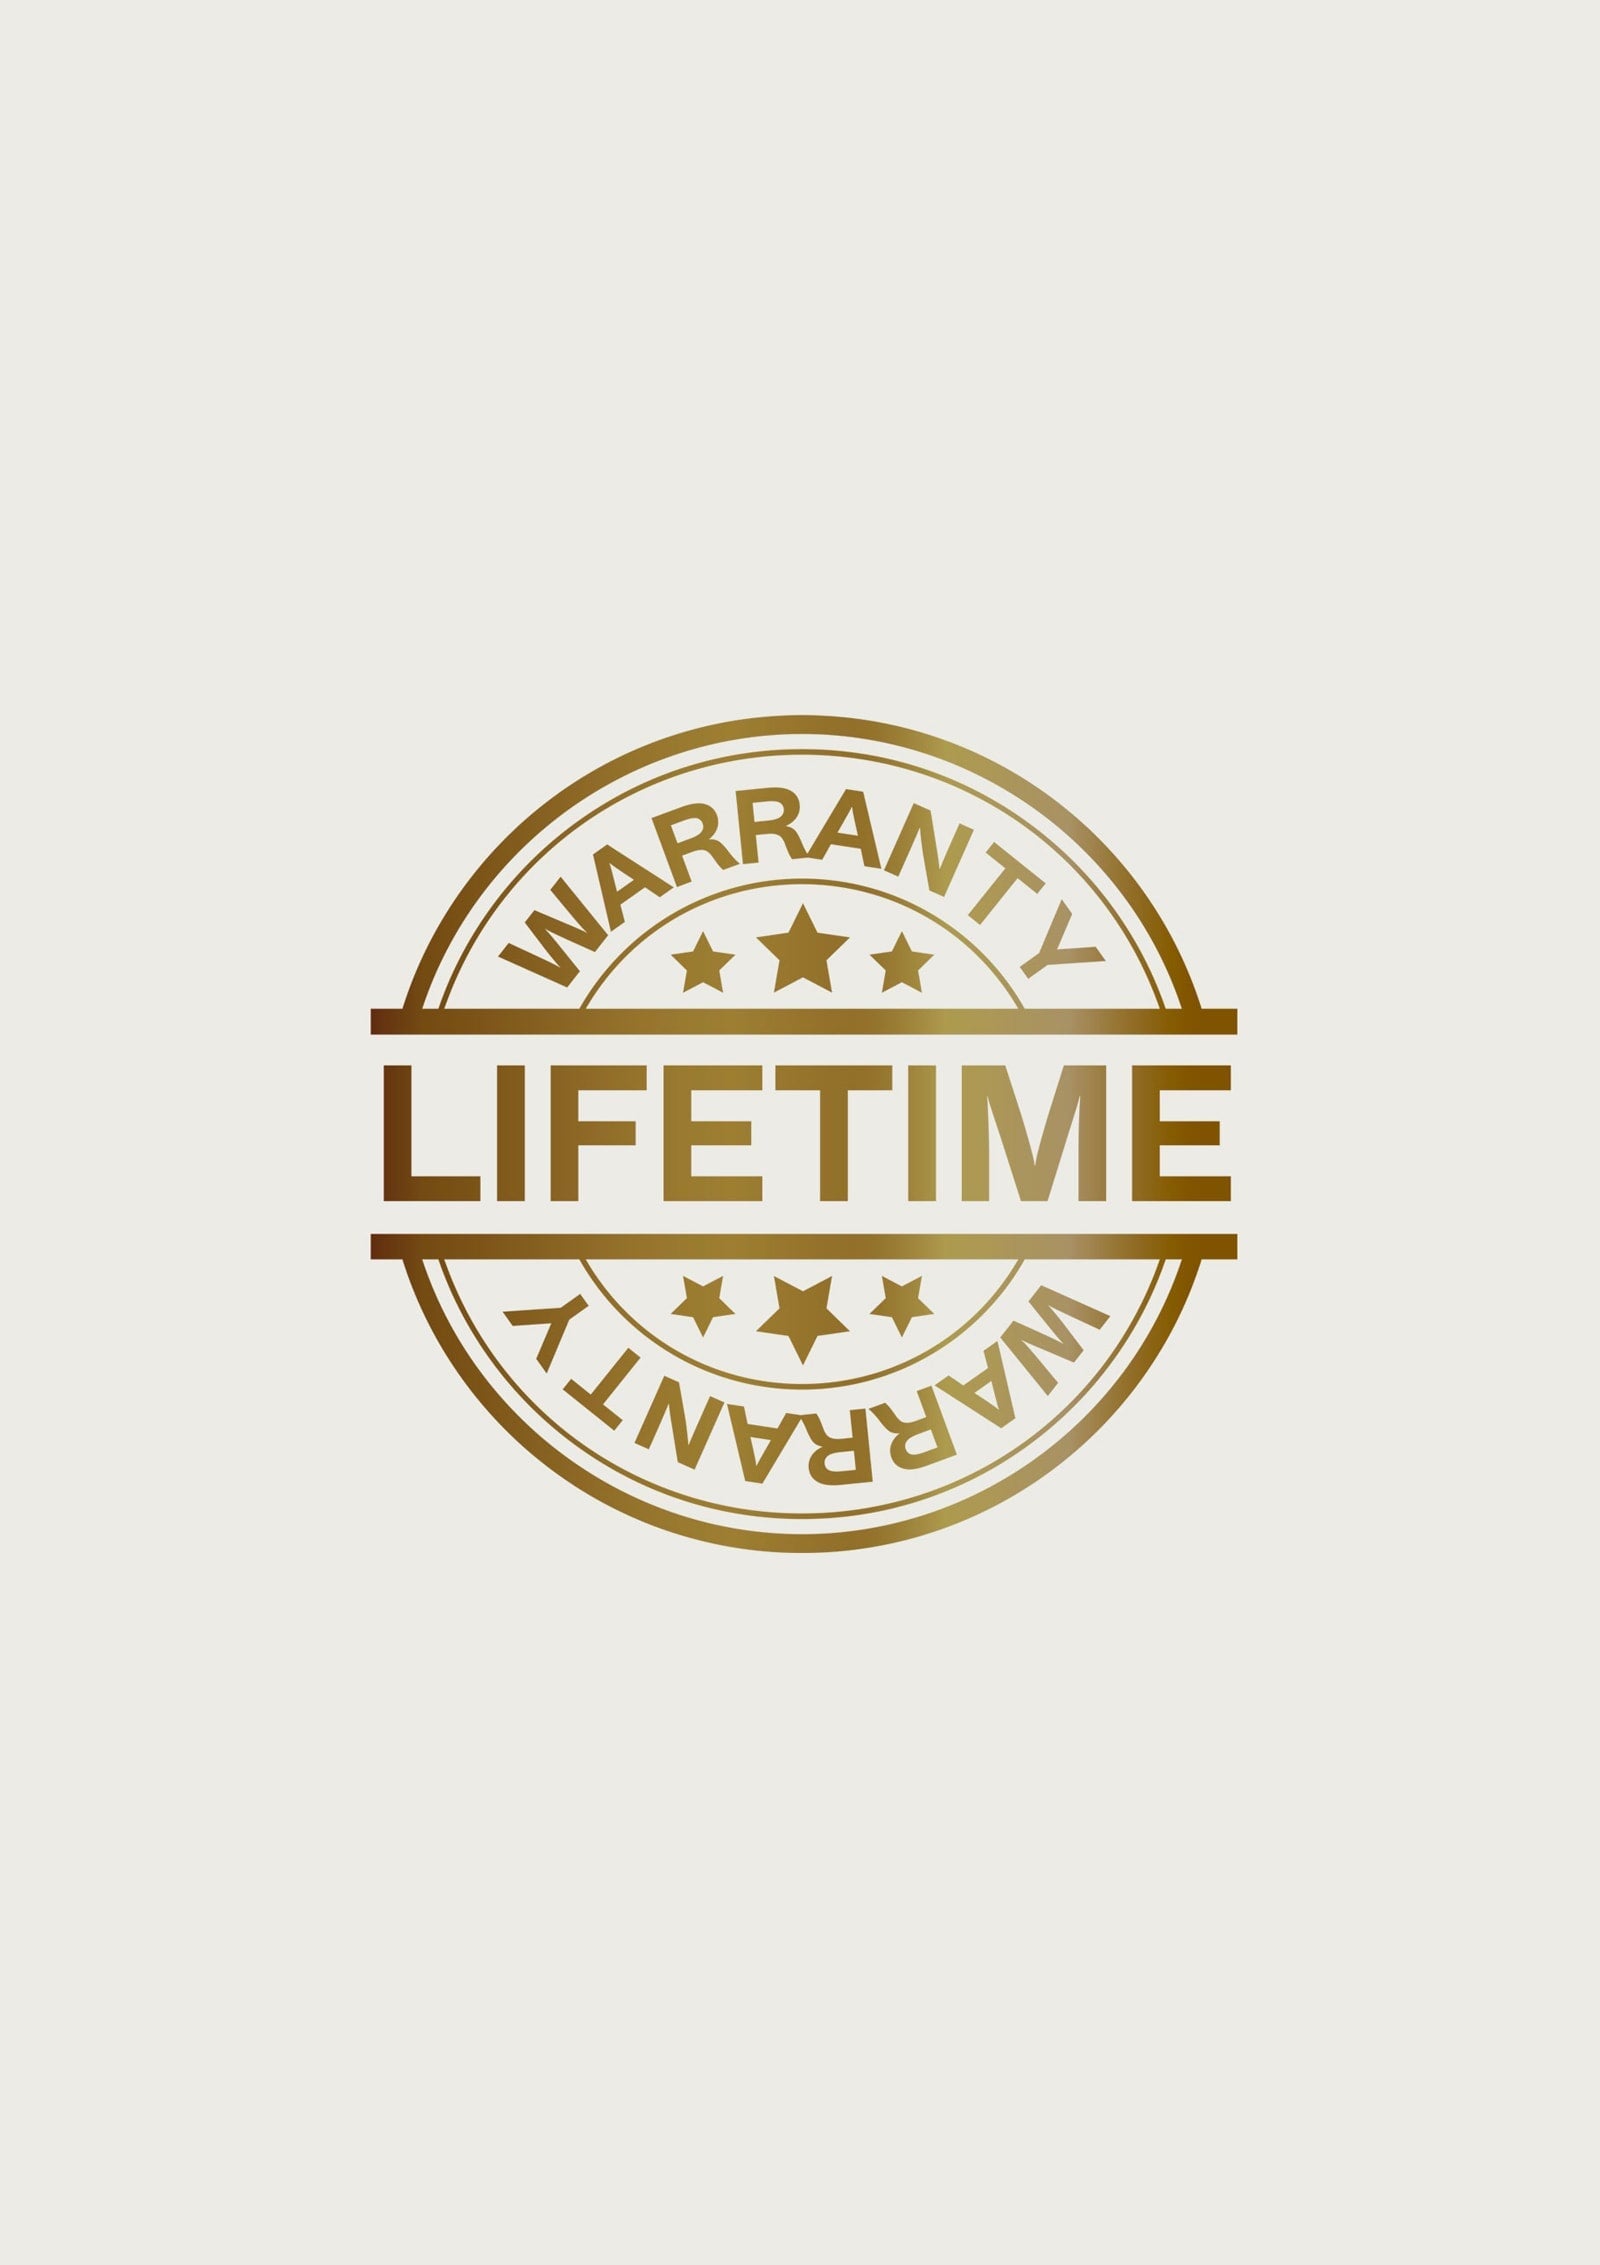 Lifetime Extended Warranty Bathmatedirect1 